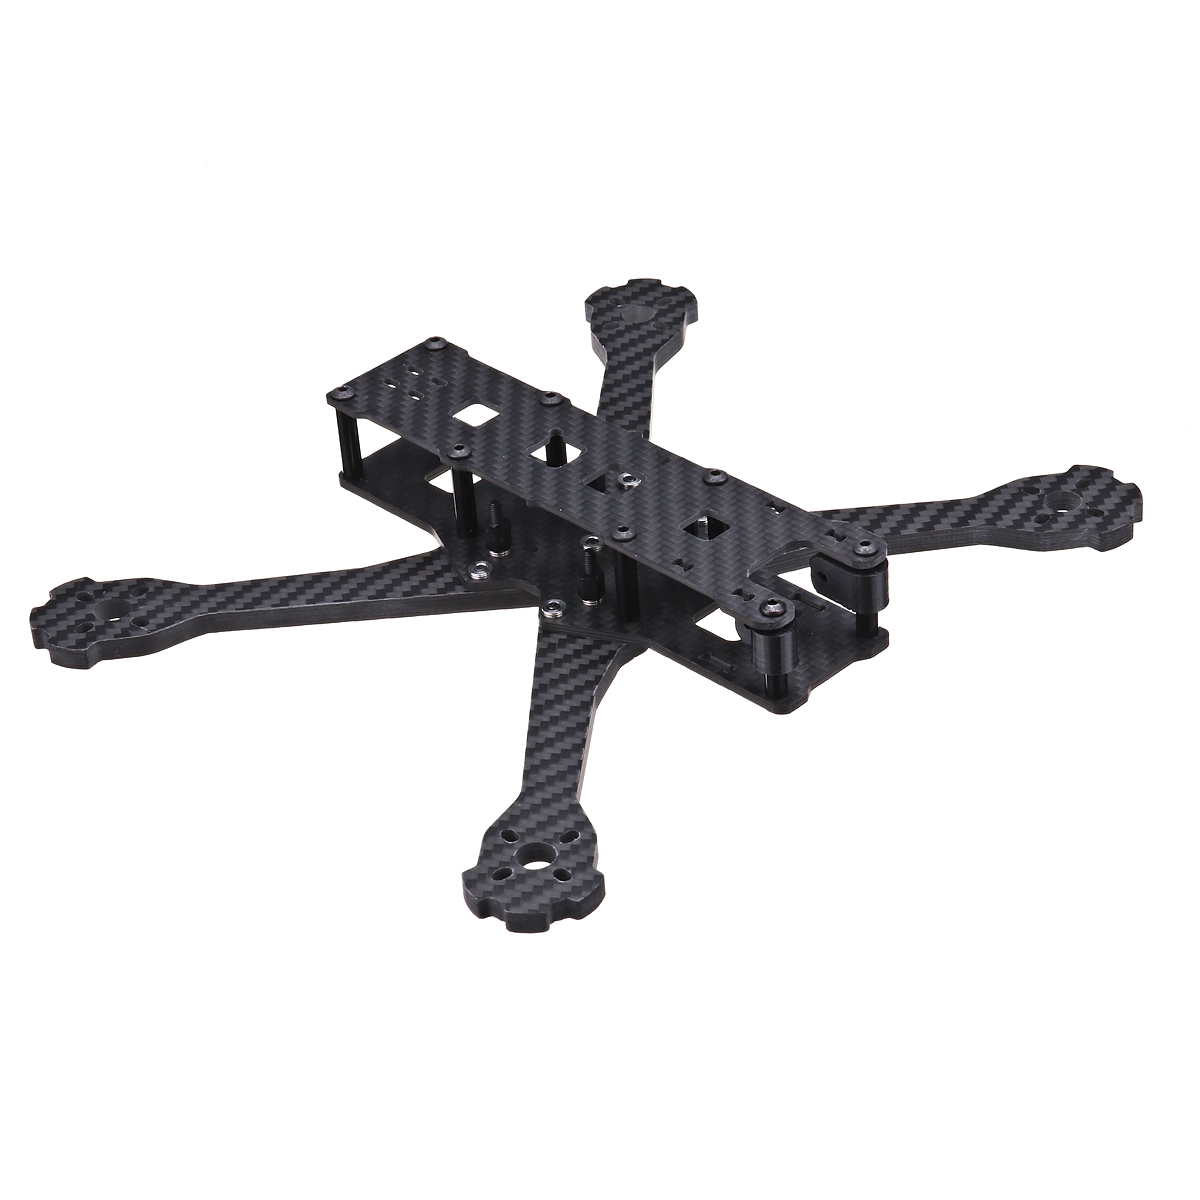 URUAV UF3 5/6/7 Inch 220/250/300mm Carbon Fiber FPV Racing Frame Kit 5.5mm Arm for RC Drone